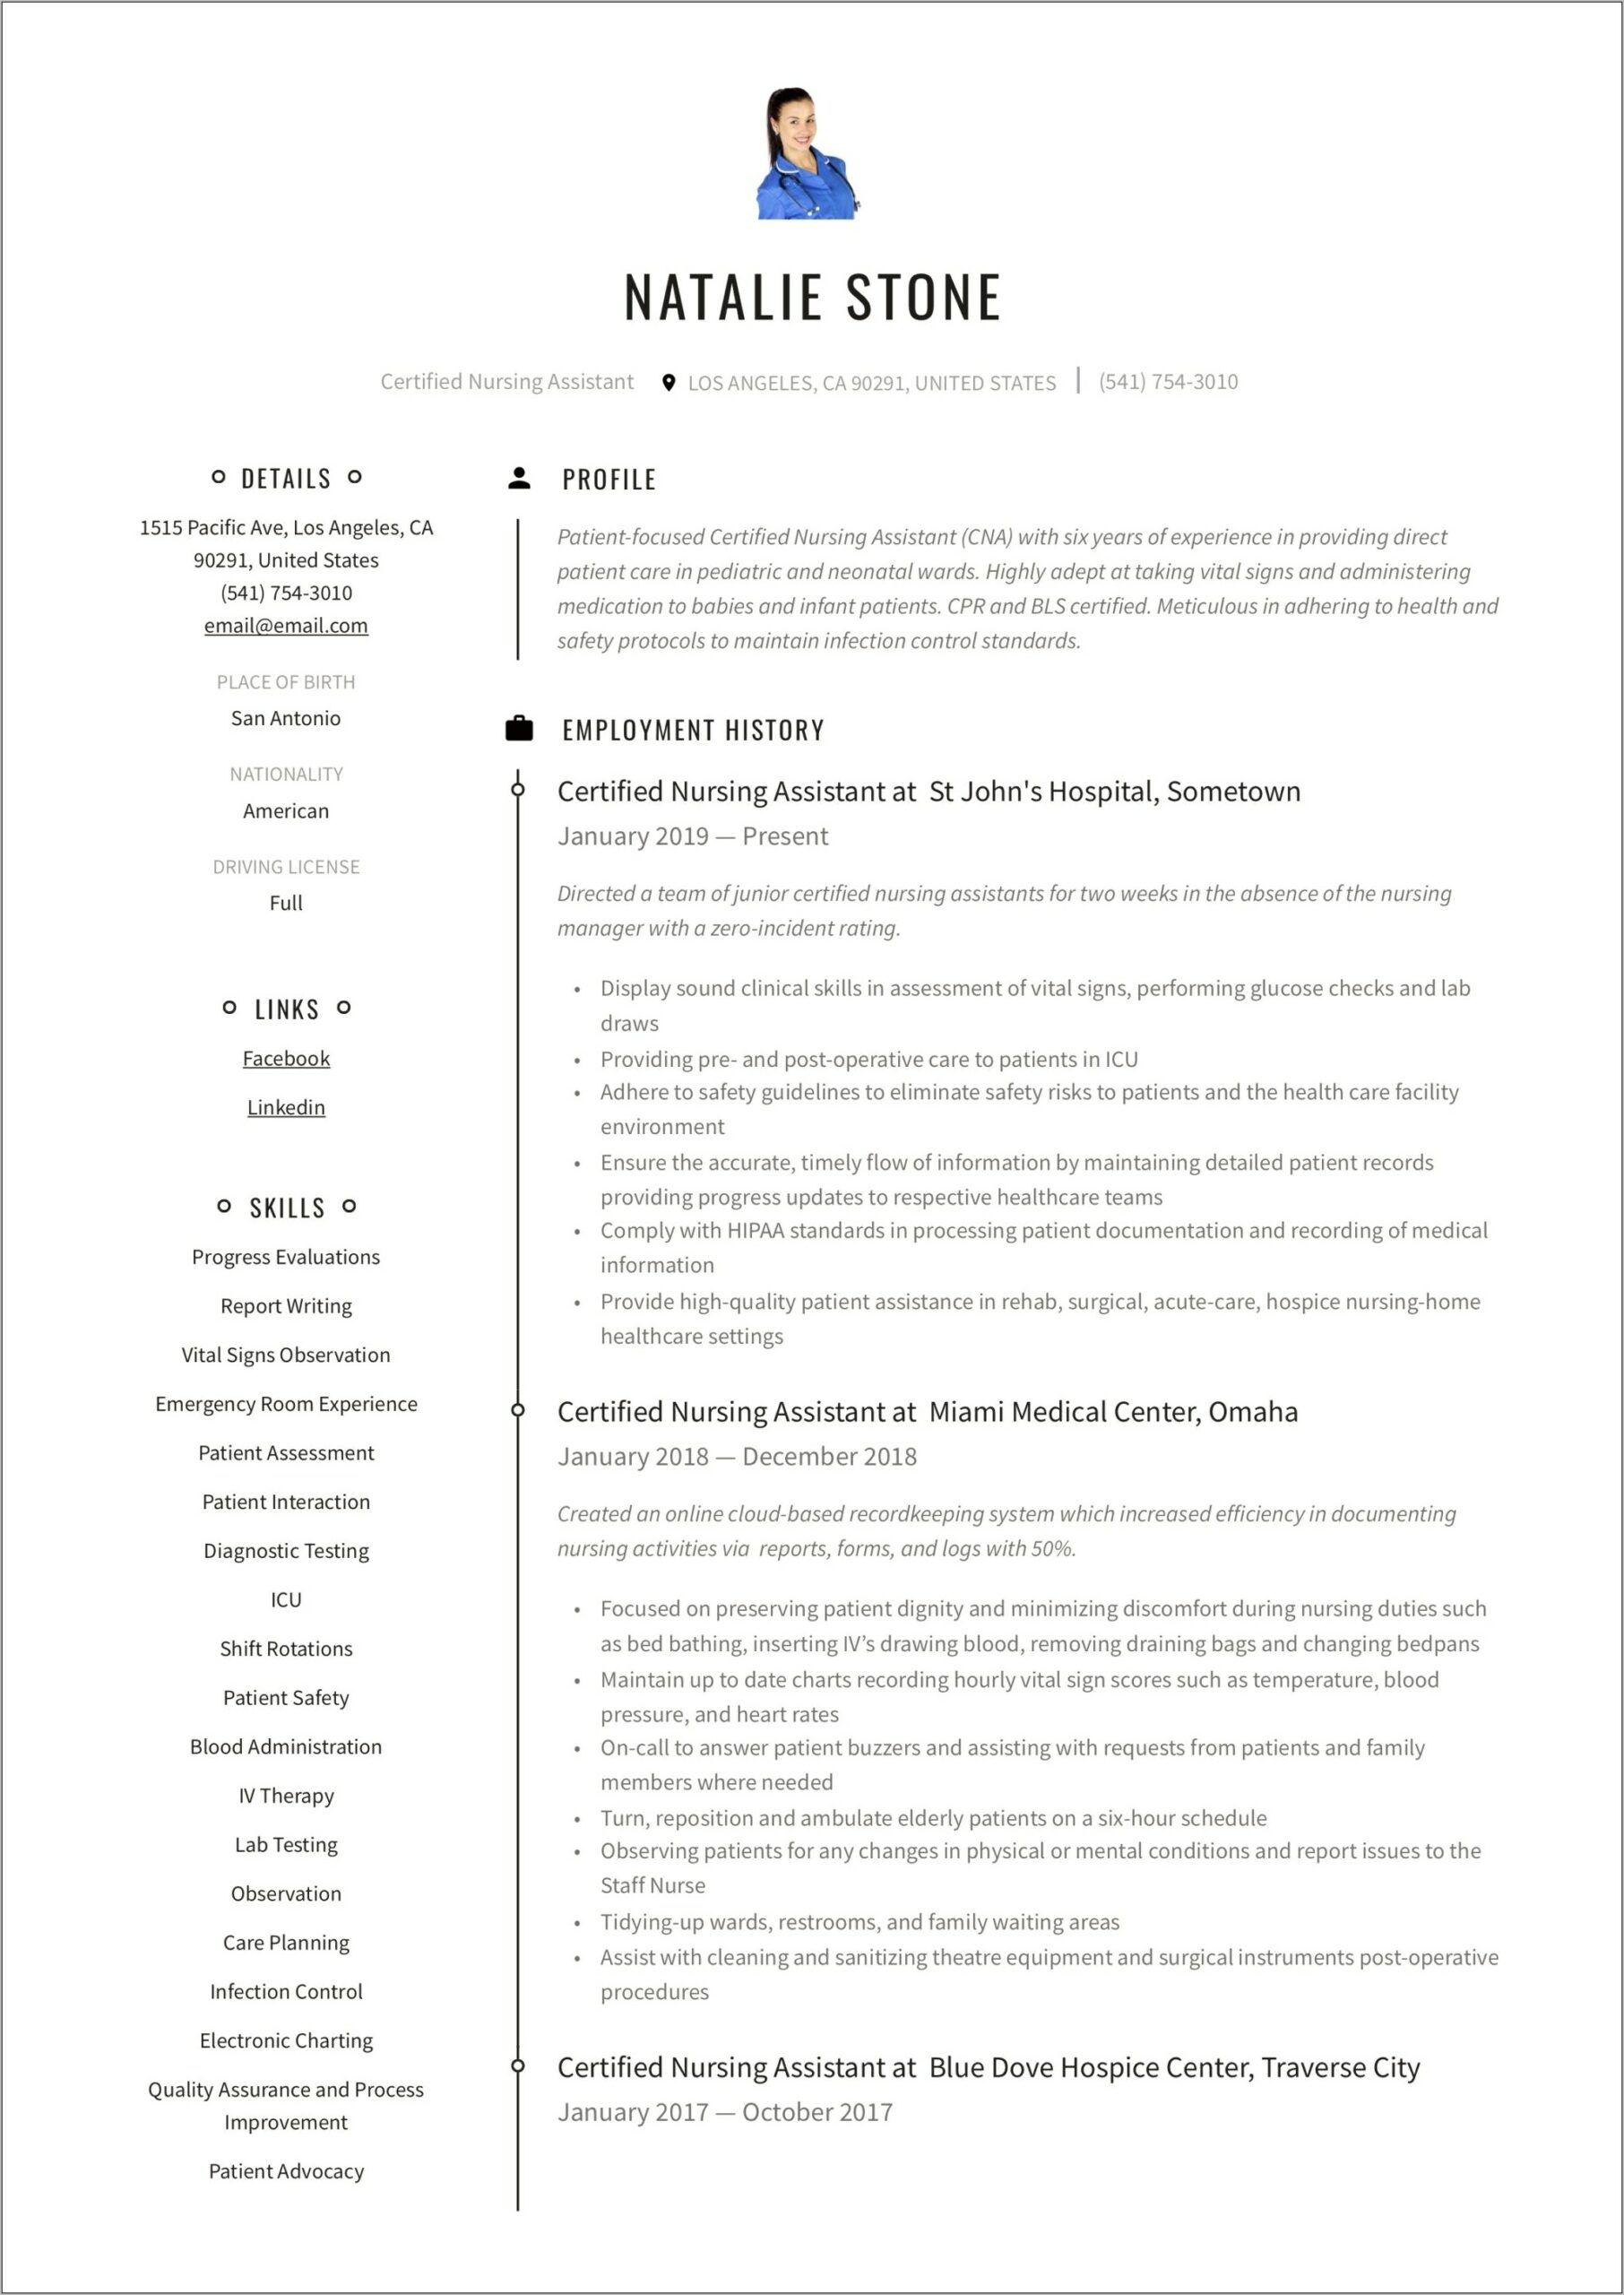 Resume Description For Certified Nursing Assistant